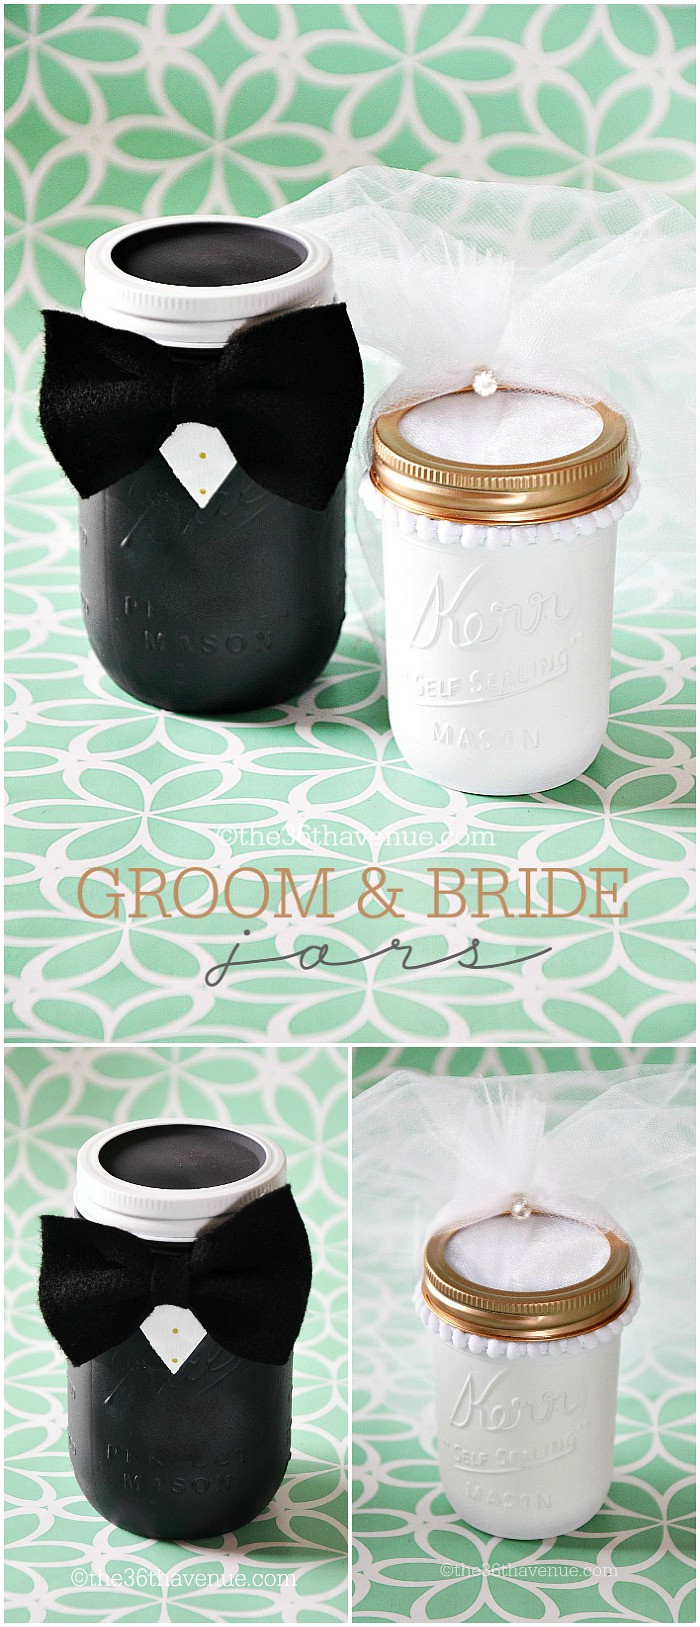 DIY Wedding Gifts For Bride And Groom
 The 36th AVENUE Mason Jar Crafts – Groom & Bride